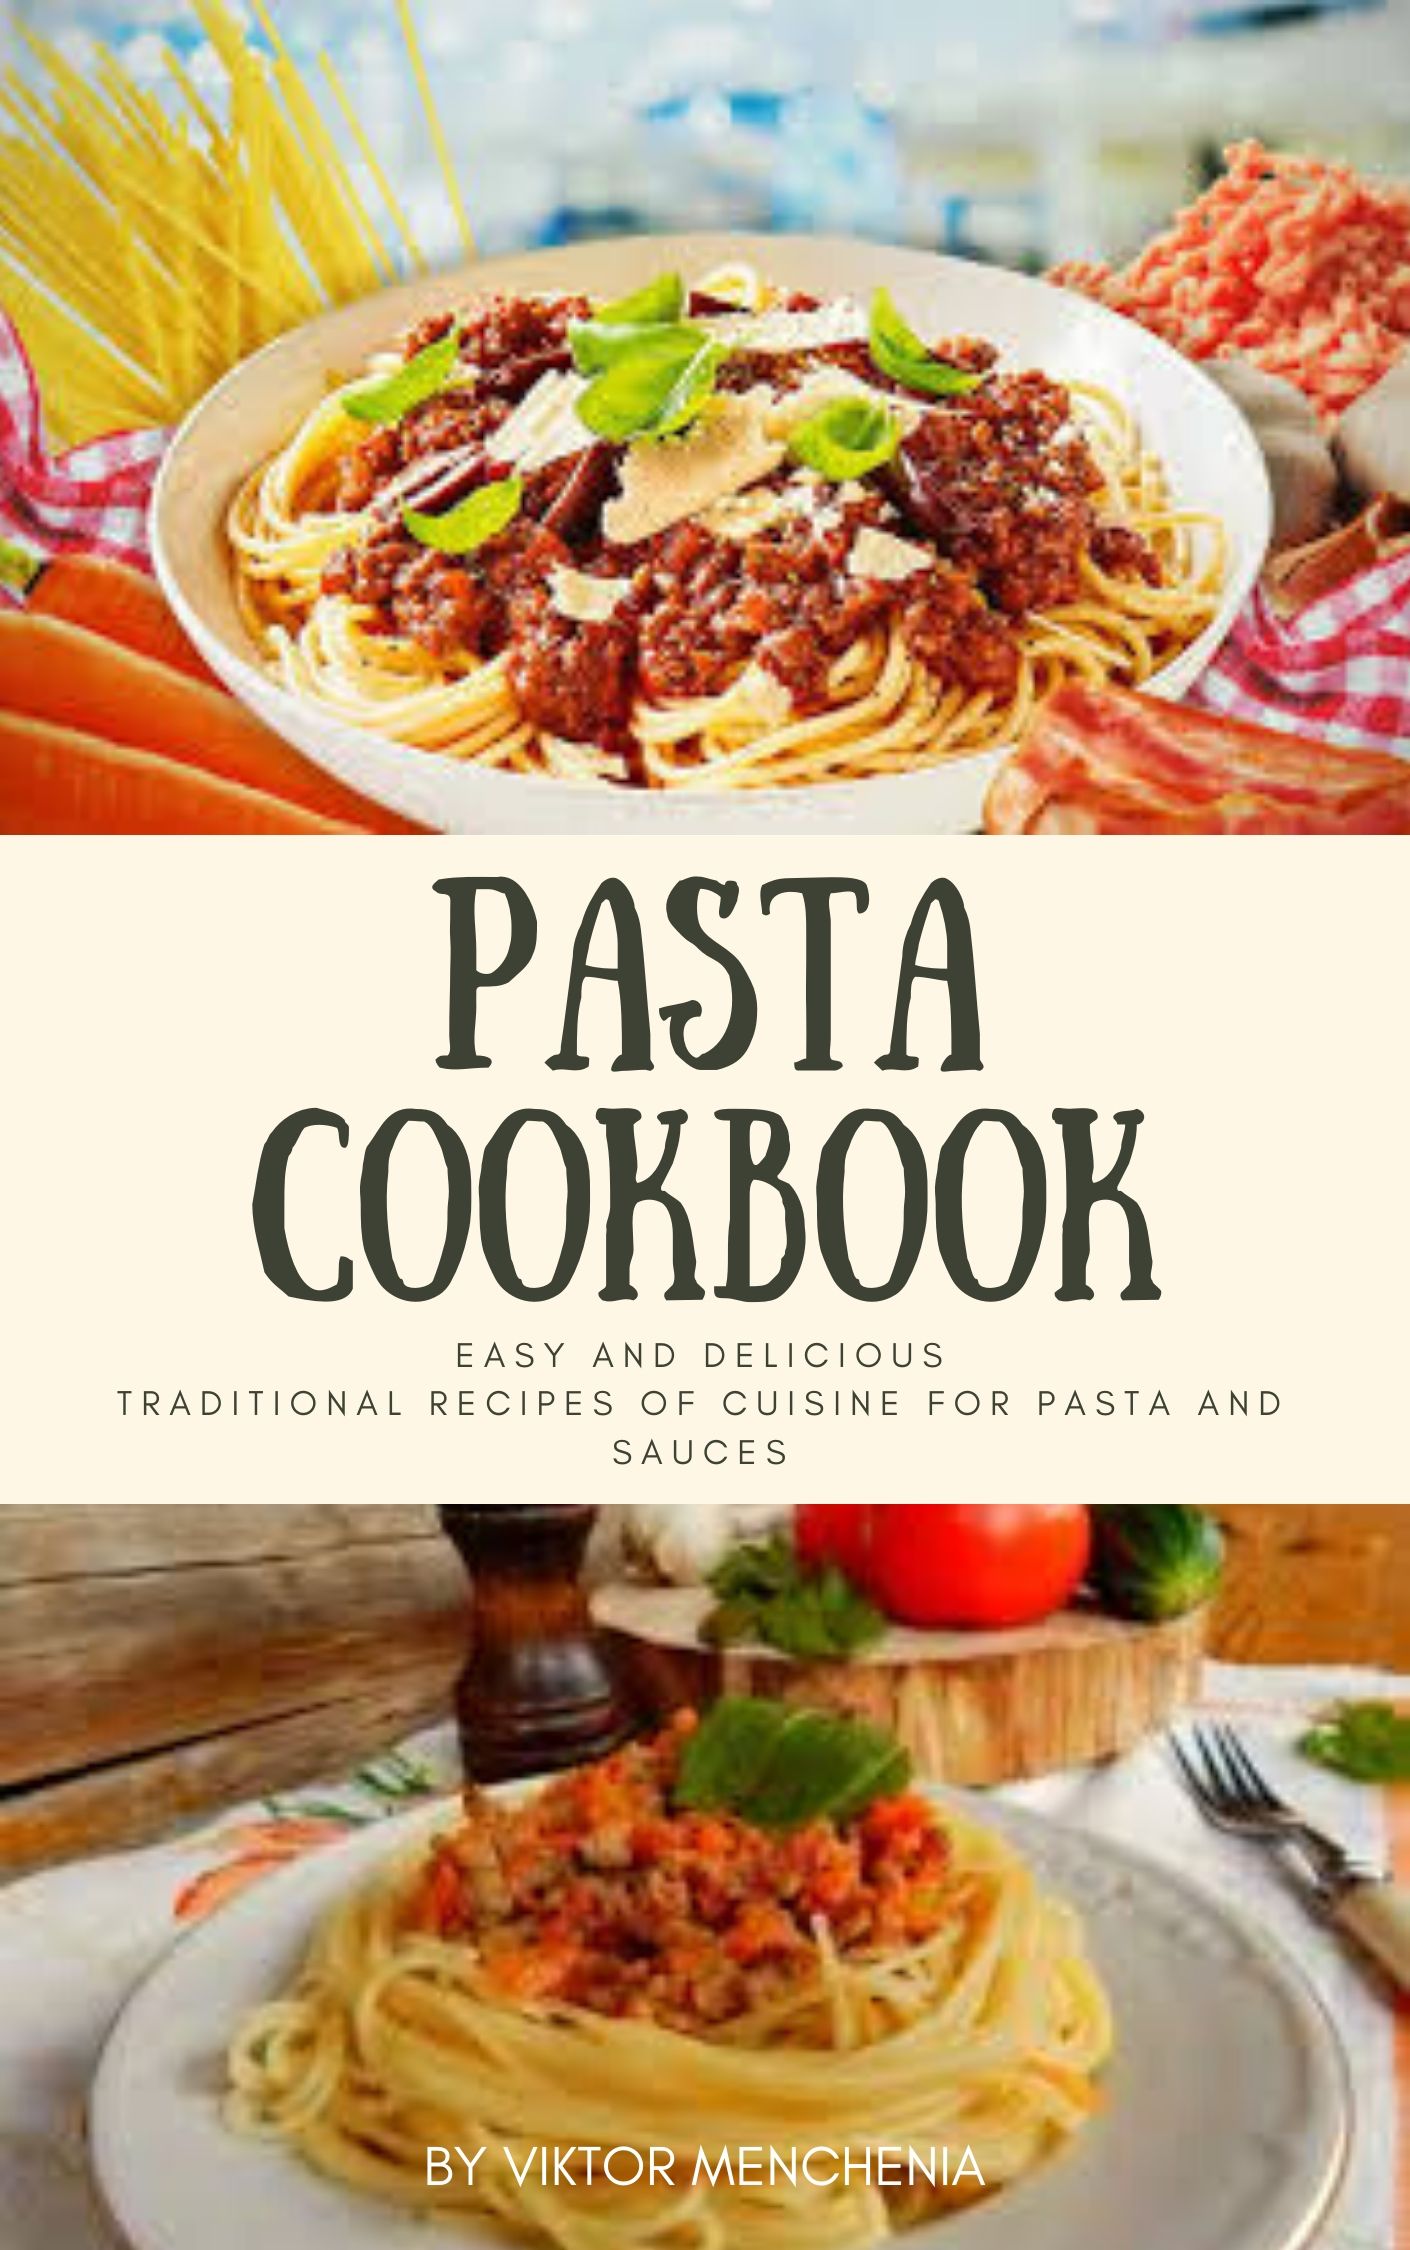 FREE: Pasta Cookbook by Viktor Menchenia